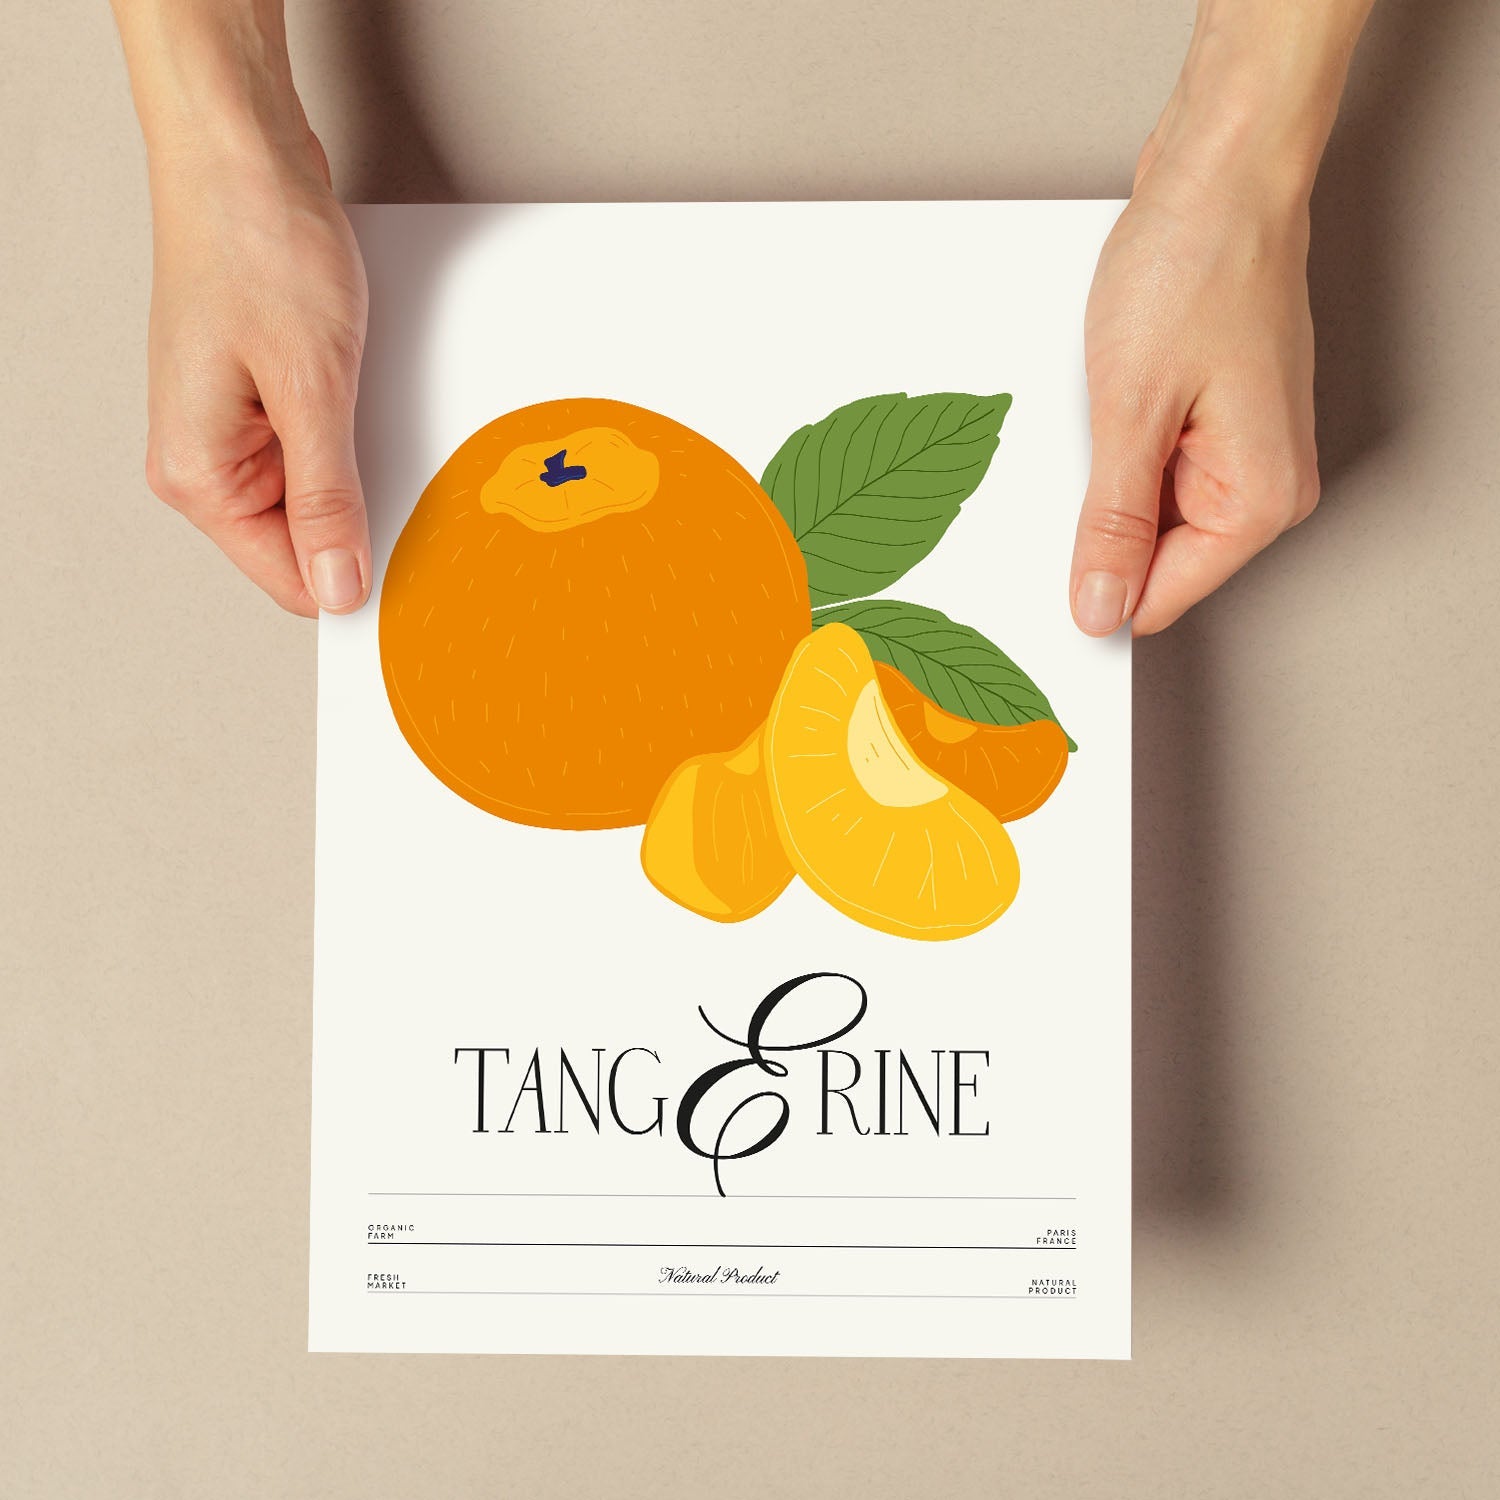 Tangerine-Artwork-Nacnic-Nacnic Estudio SL